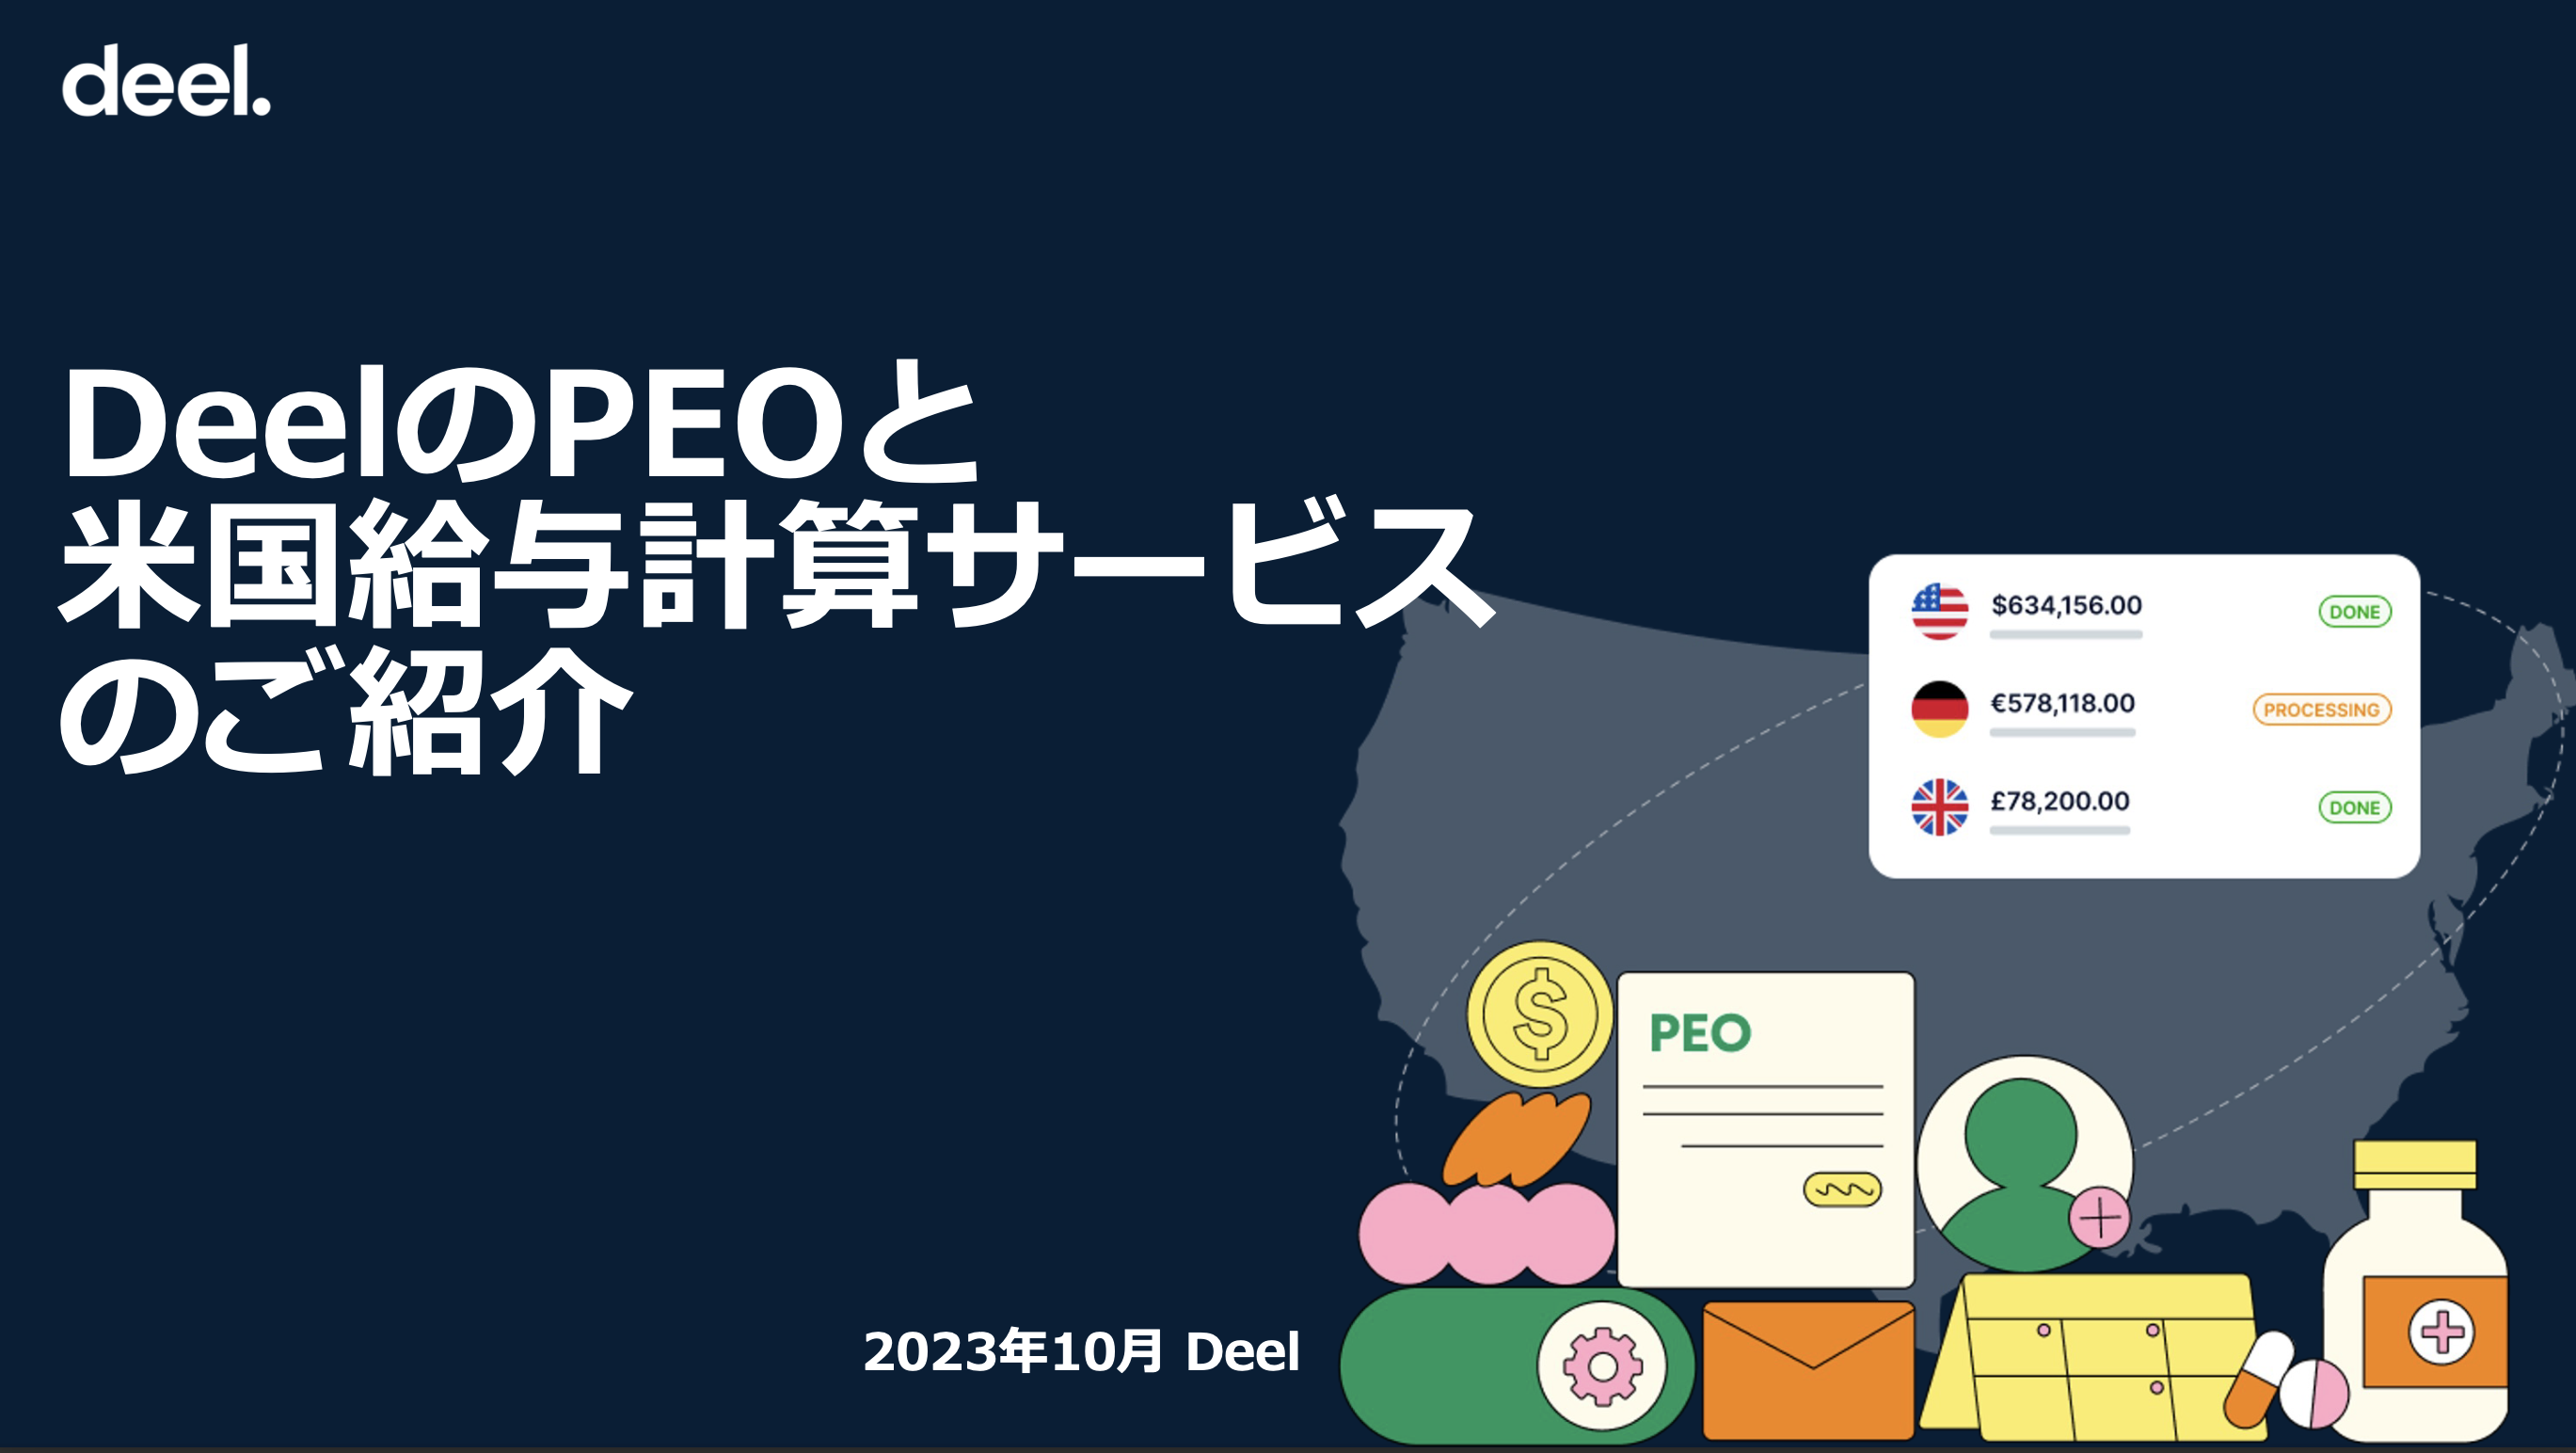 JP_PEO and US Payroll eyecatch image